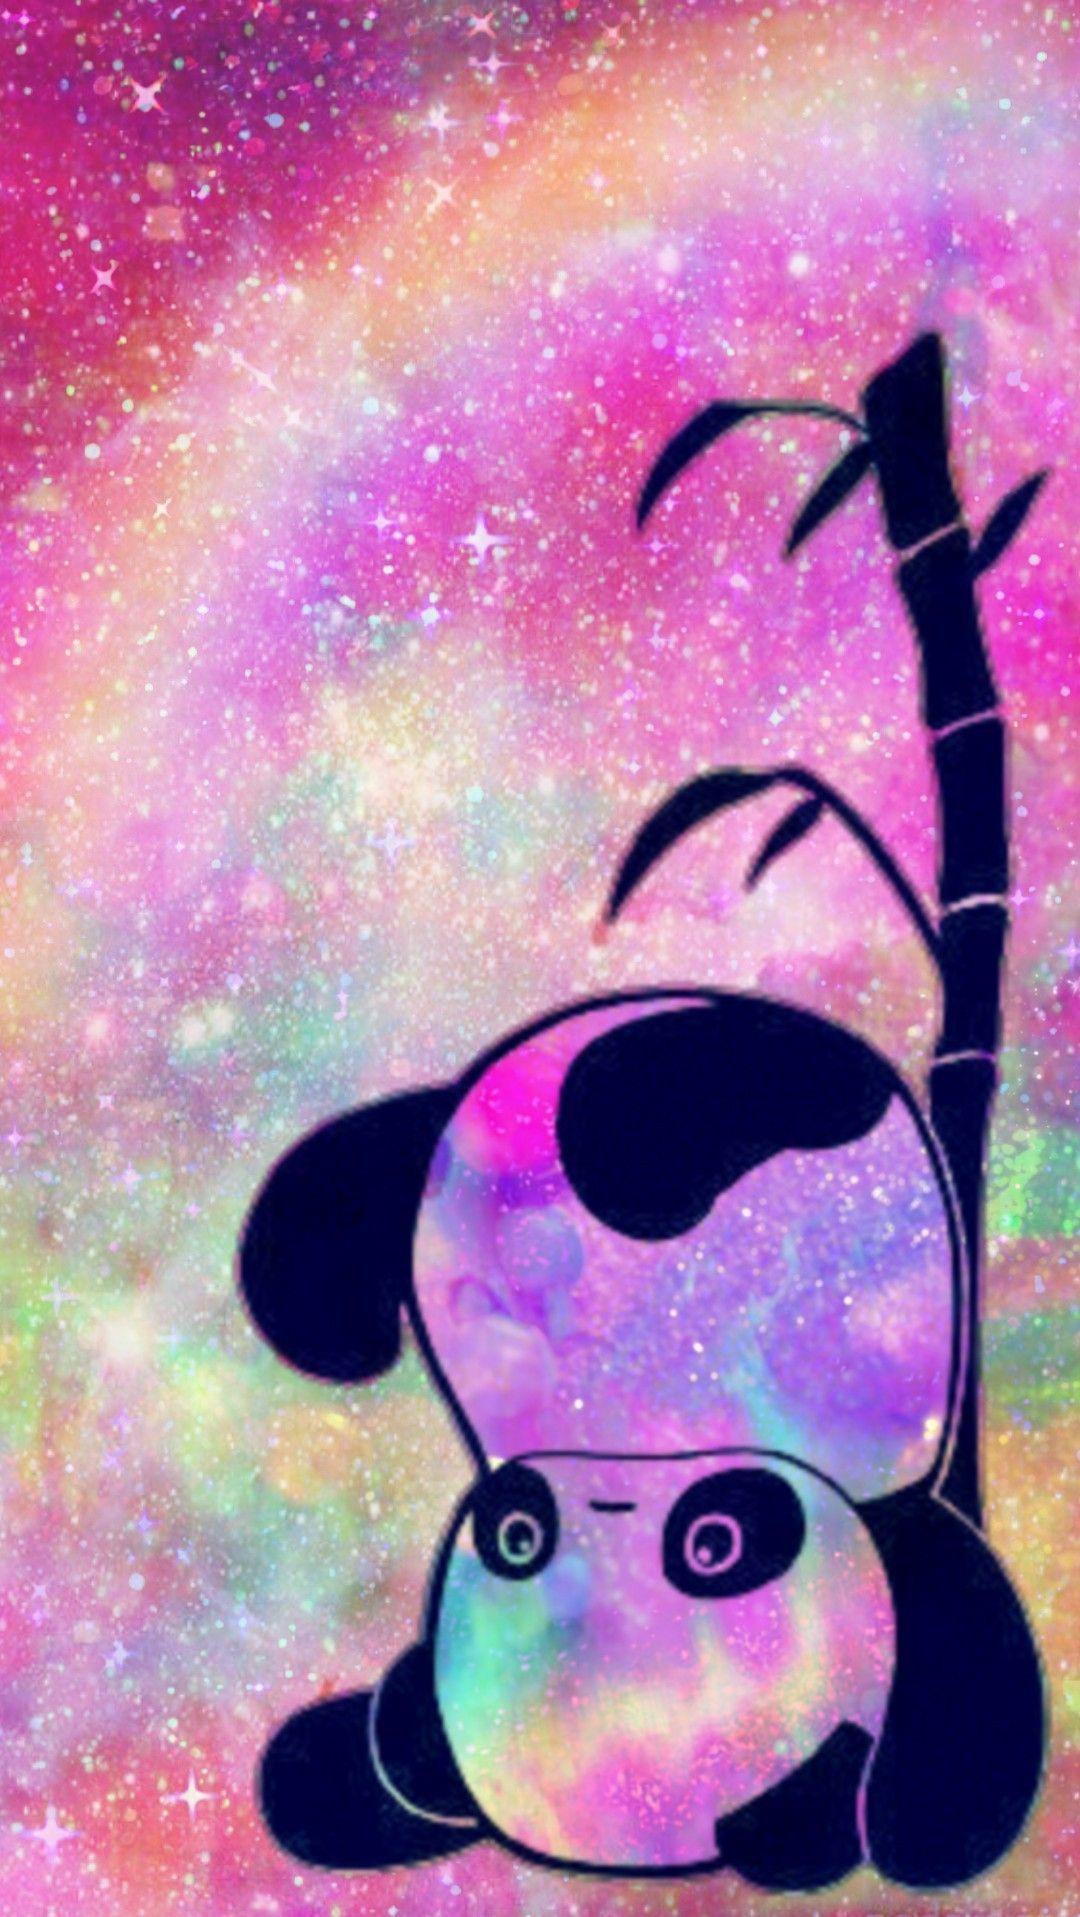 Galaxy Panda Wallpapers - Top Free Galaxy Panda ...